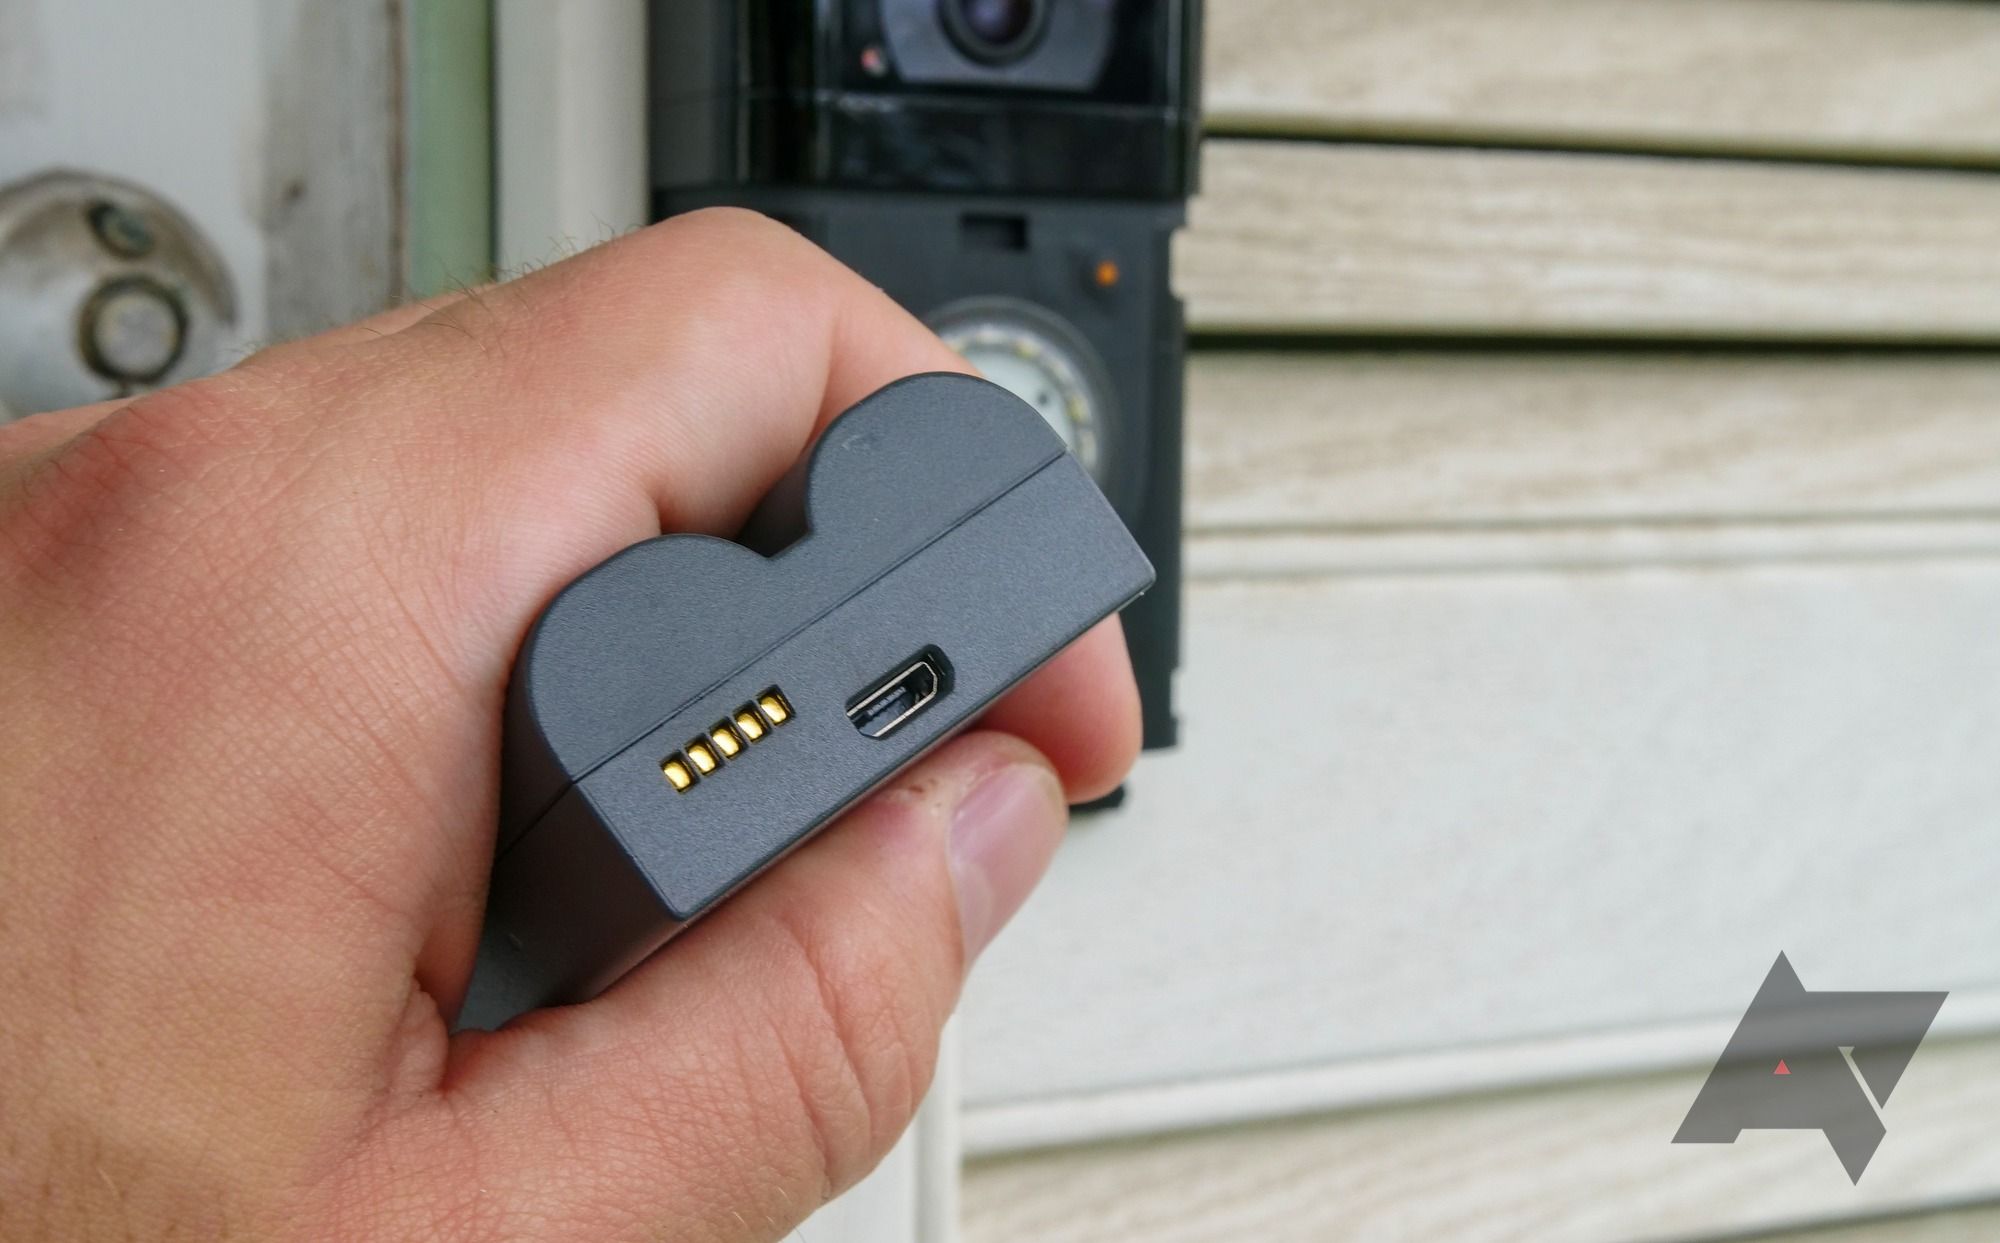 Ring Video Doorbell 4 – Previous Generation